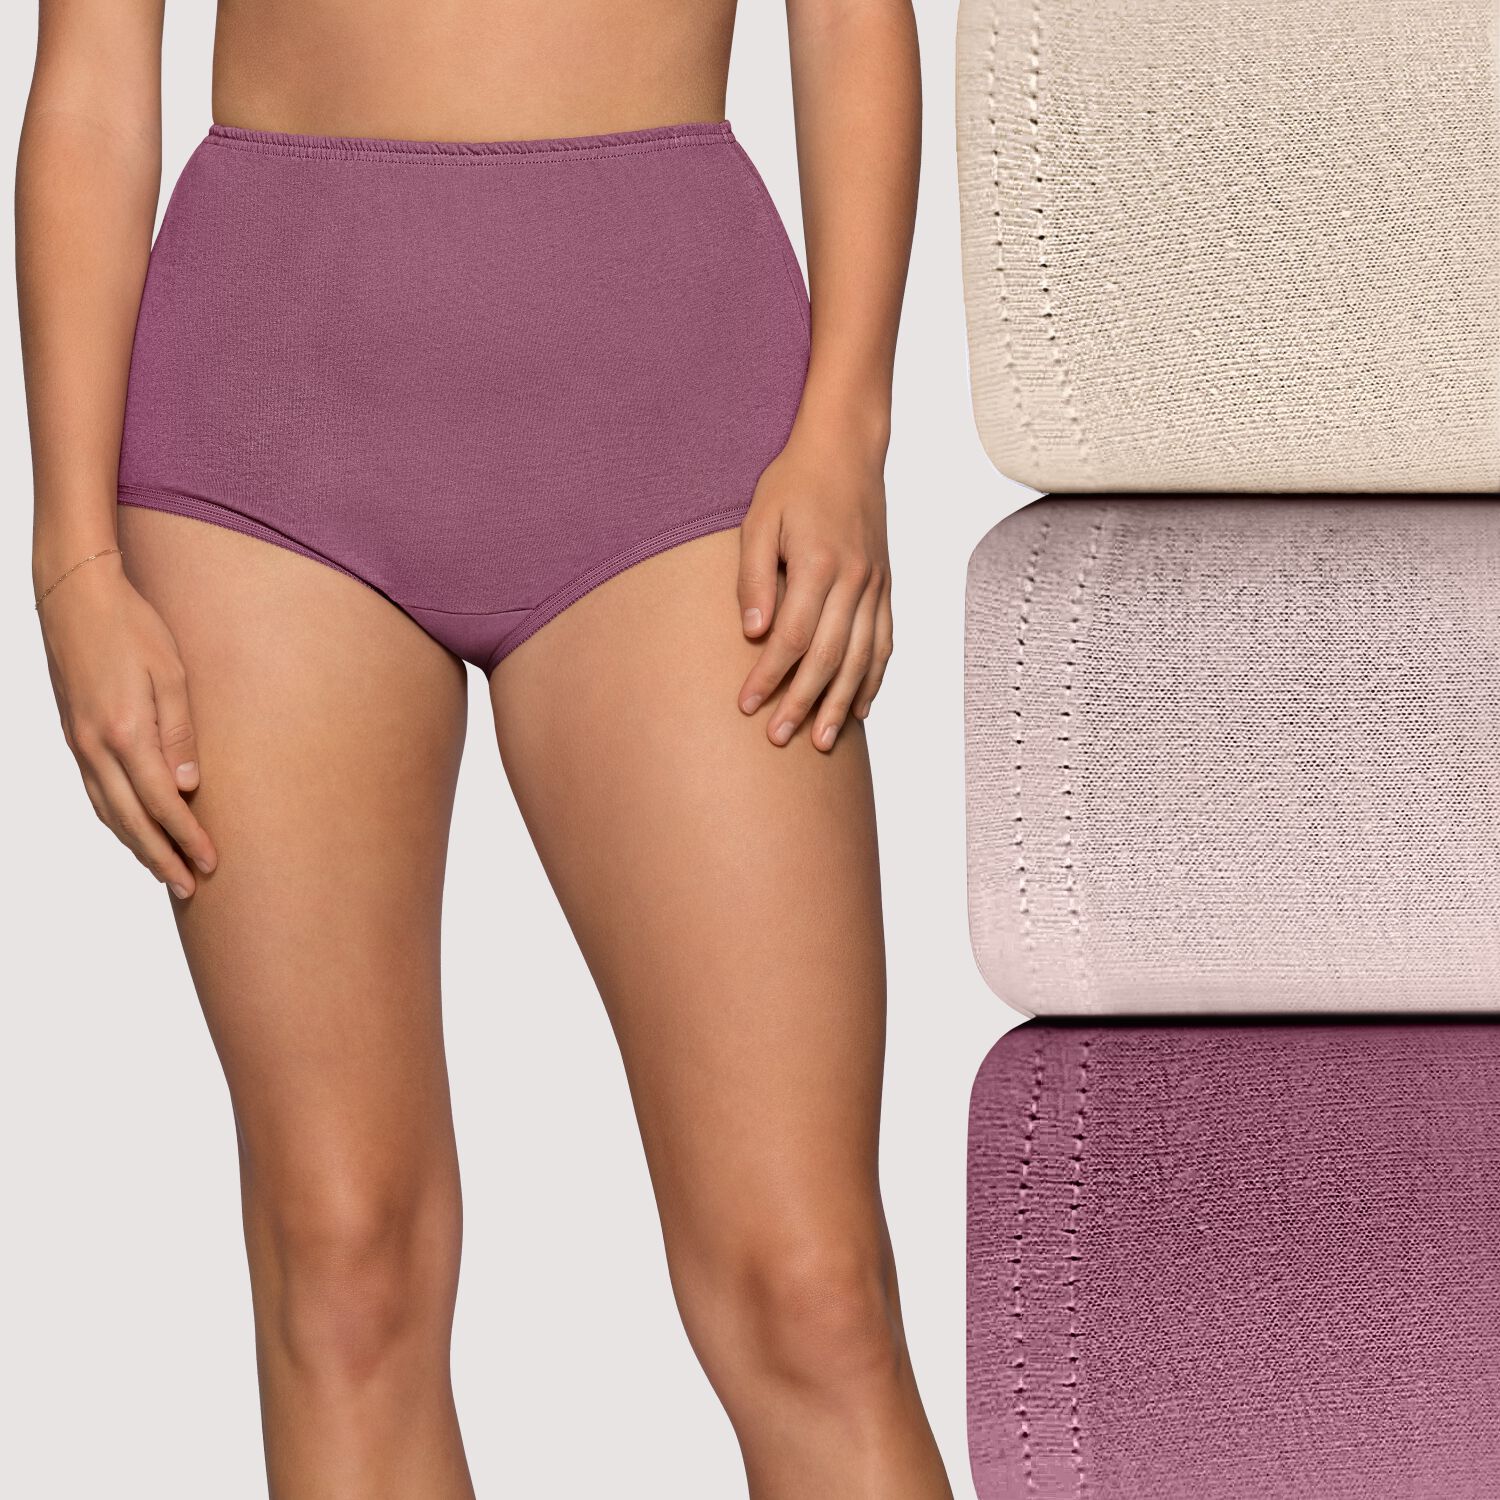 Shopkins 3 Pair Girls' Underwear Hipster Undies Panties Pack Girl Size 8